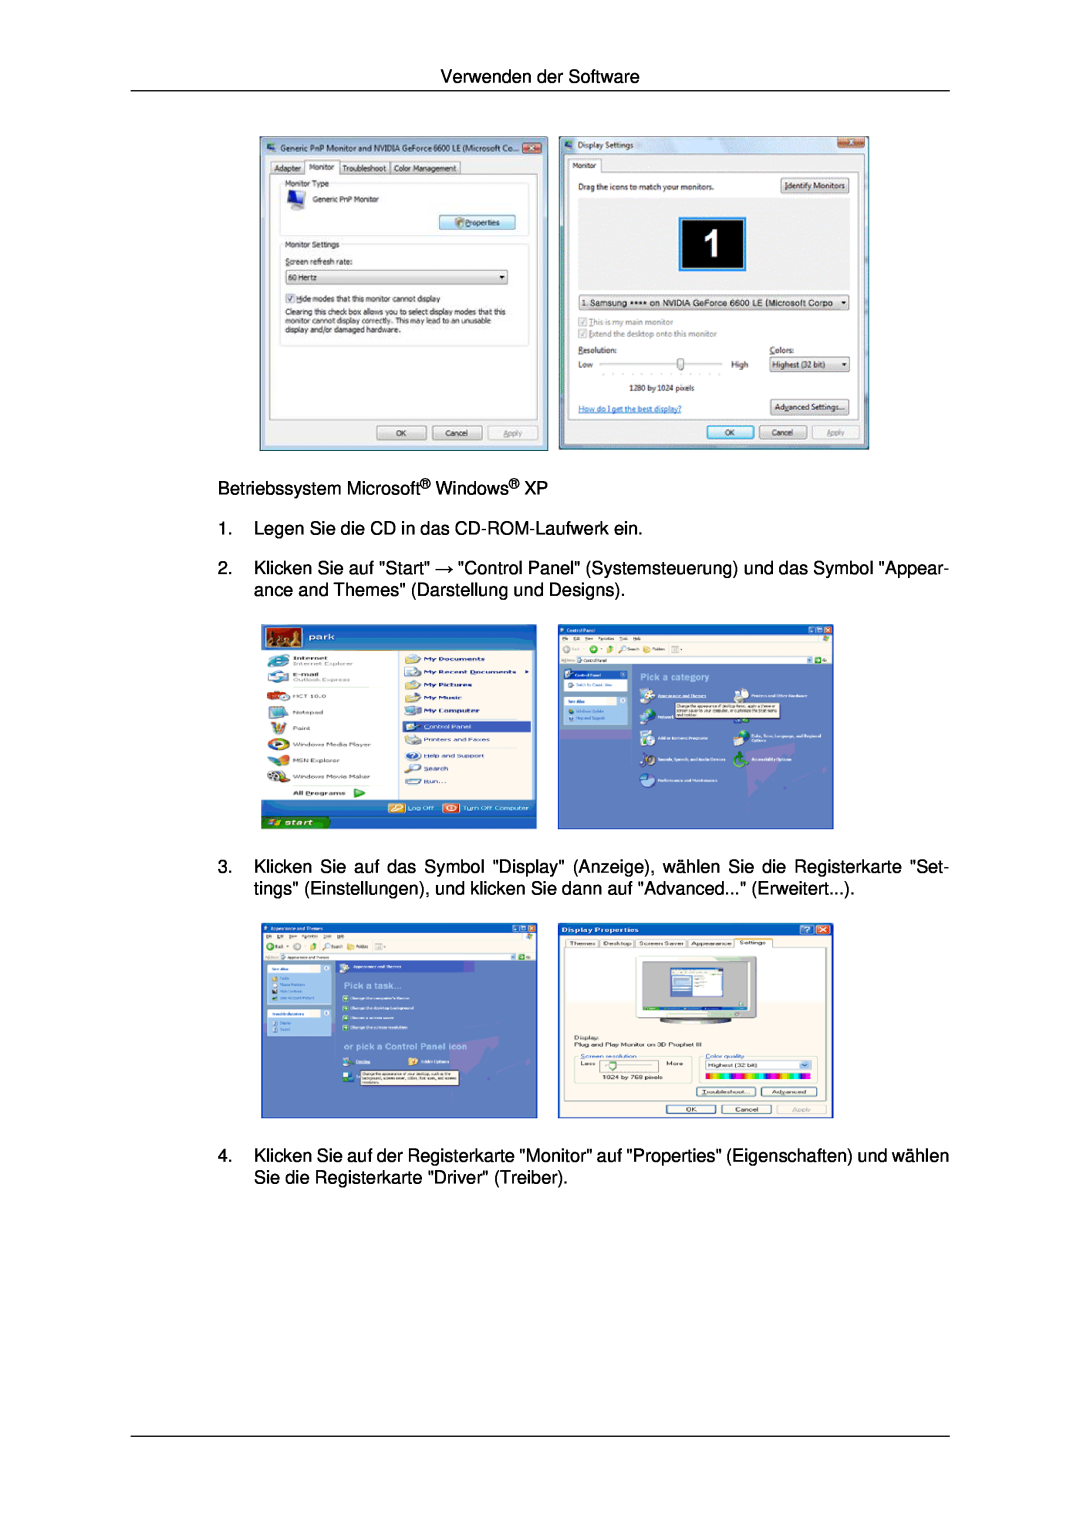 Samsung LH46MSTABB/EN, LH46MRPLBF/EN, LH40MRTLBC/EN manual Verwenden der Software, Betriebssystem Microsoft Windows XP 